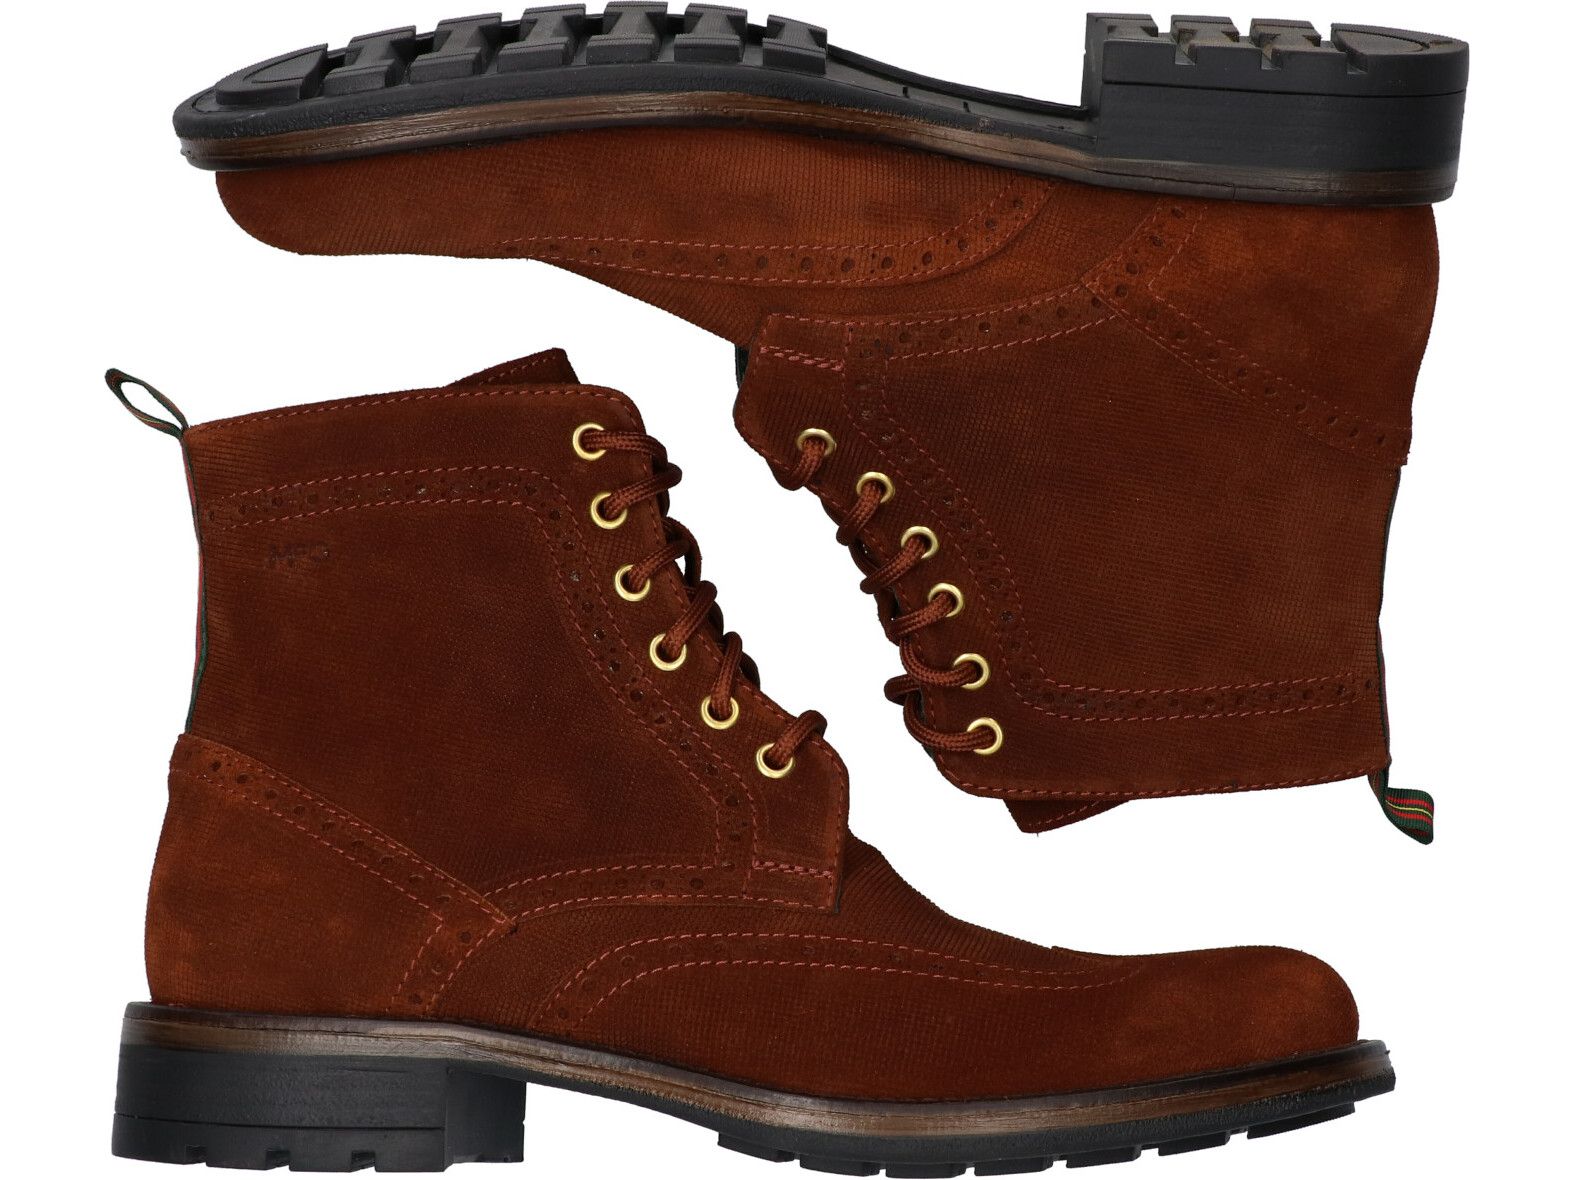 mcgregor-suede-boots